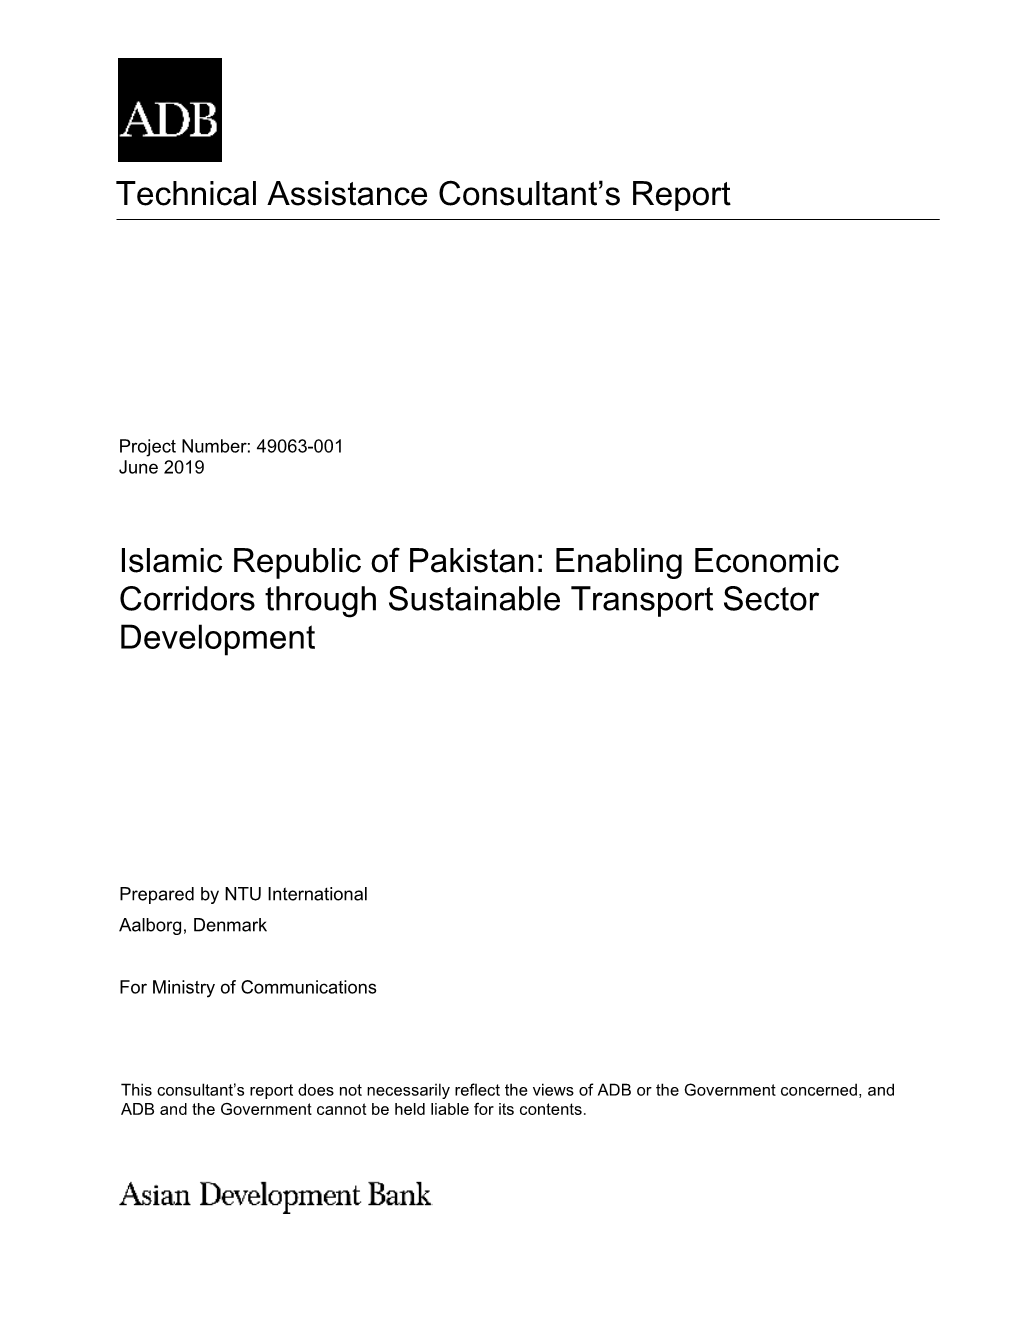 49063-001: Enabling Economic Corridors Through Sustainable